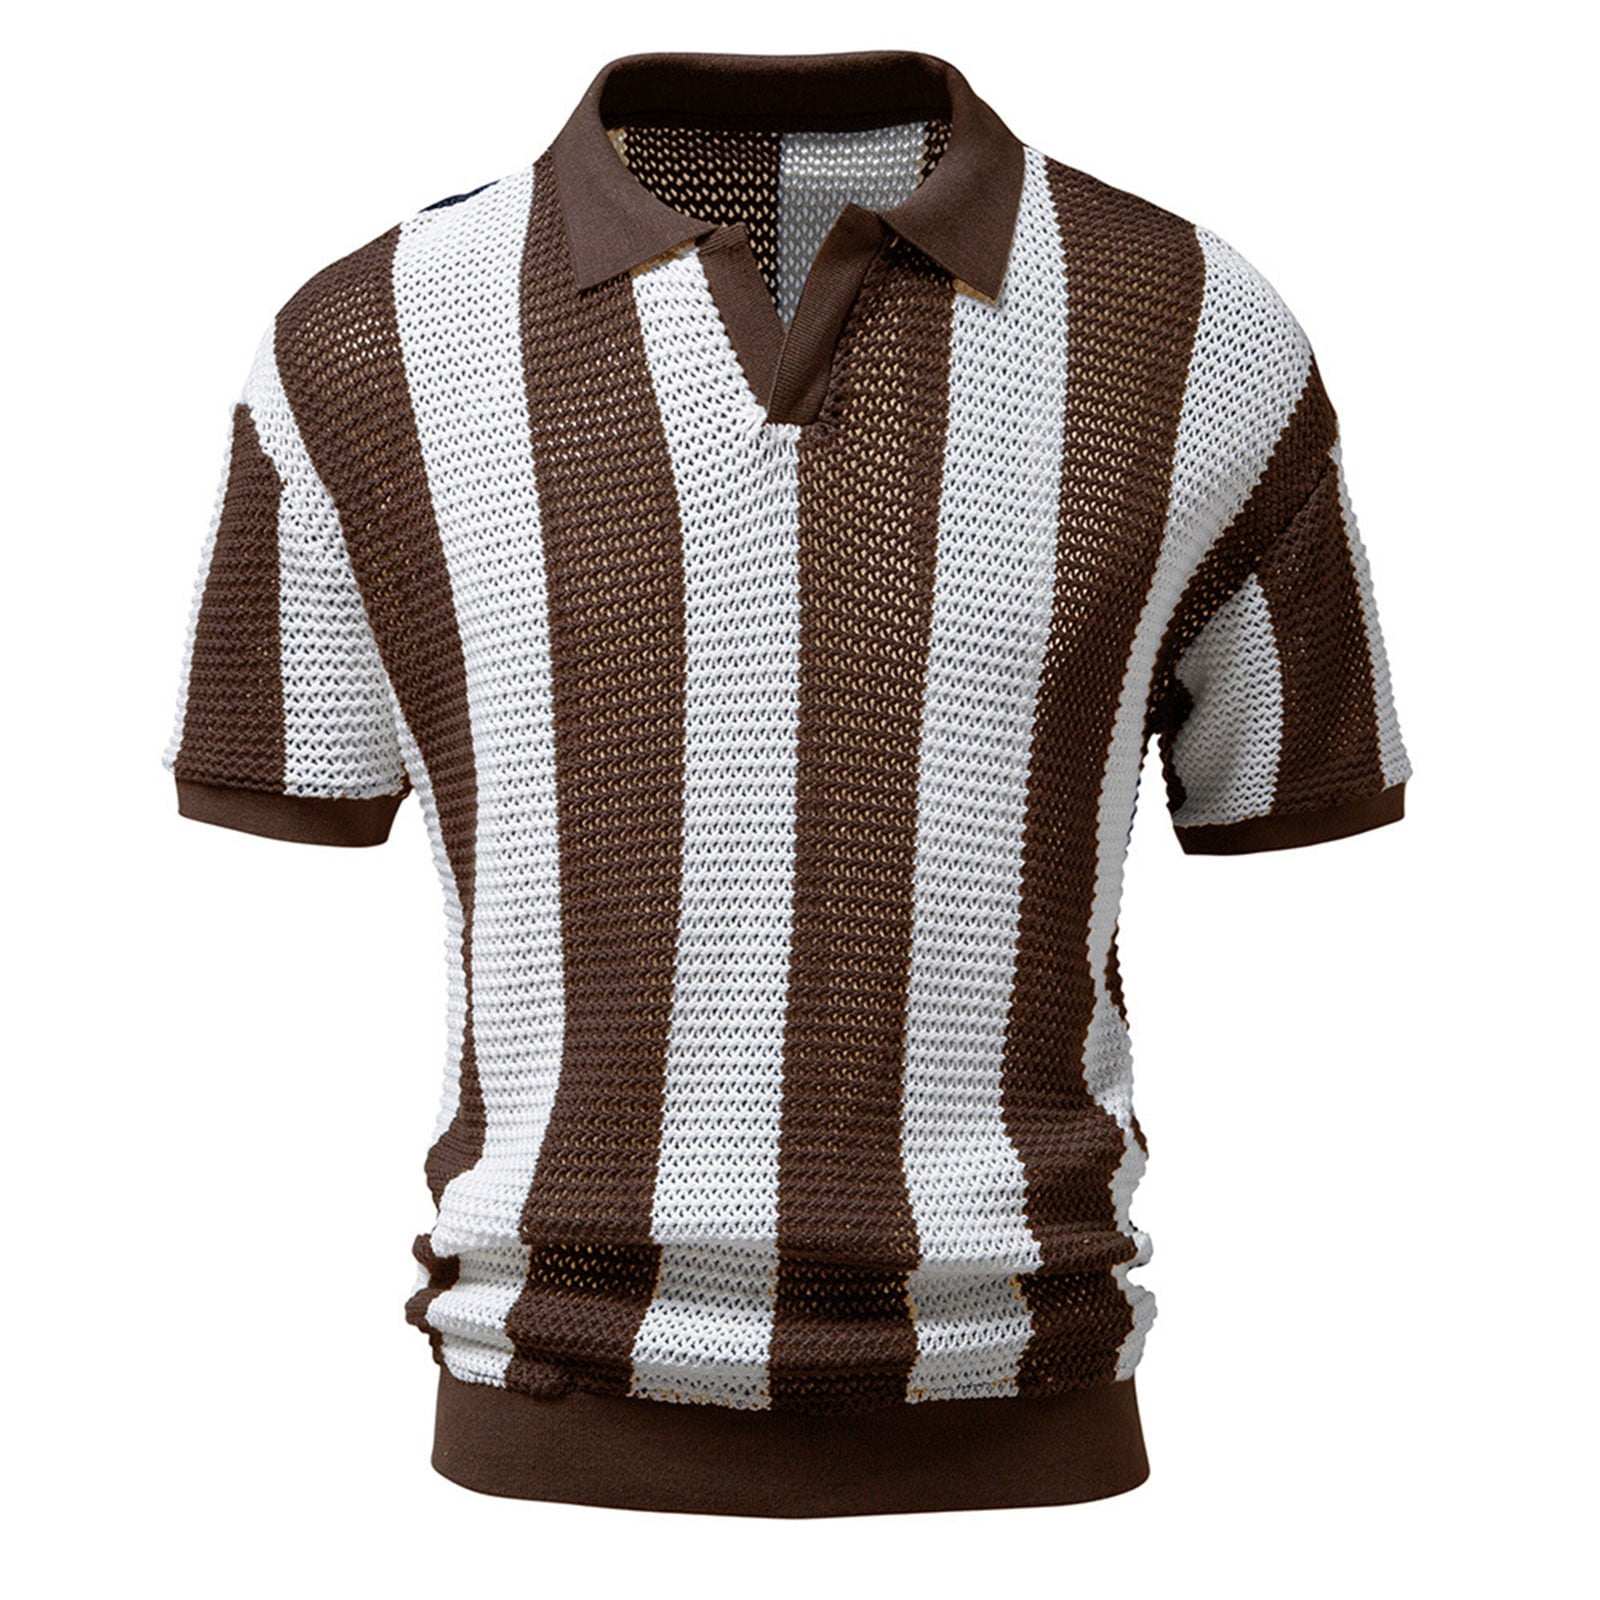 Ierhent Mens Polo Shirts Short Sleeve Golf Shirts for Men Performance ...